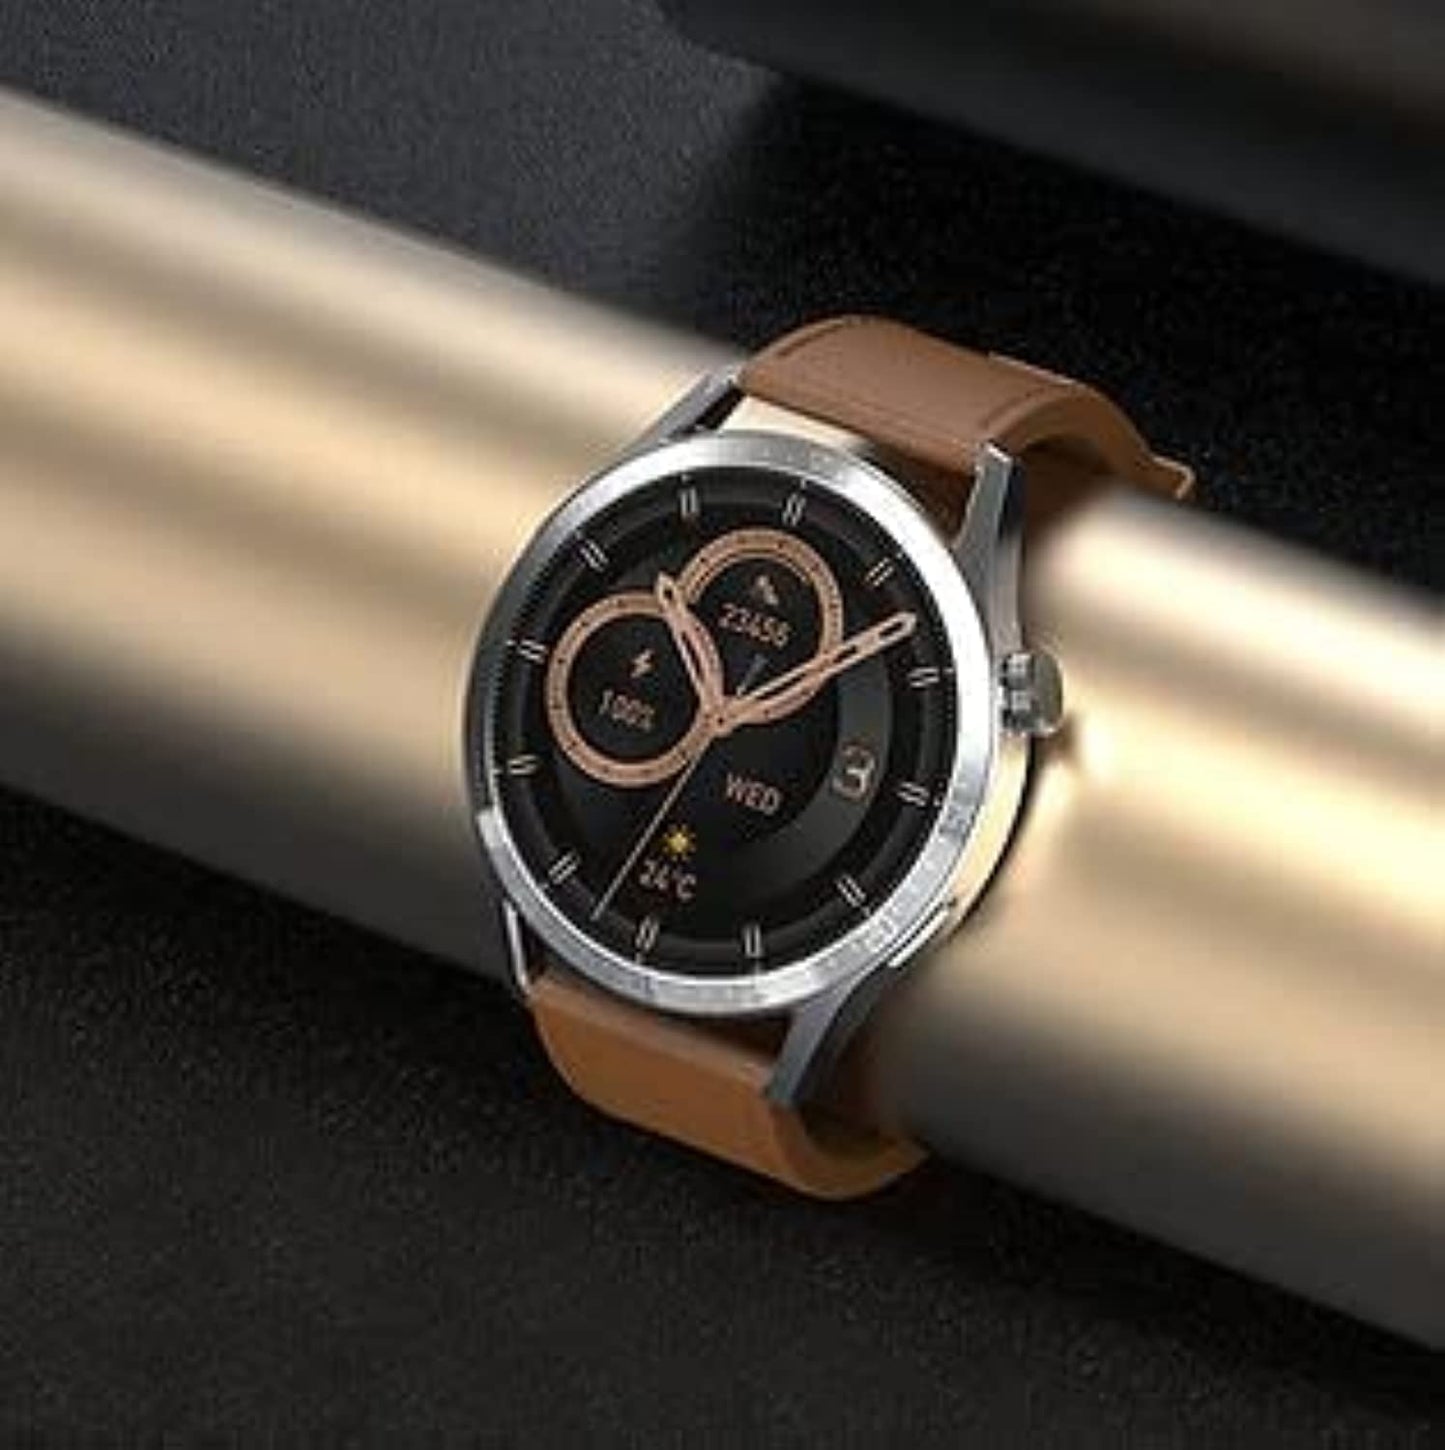 Haino Teko RW-13 Smart Watch Germany